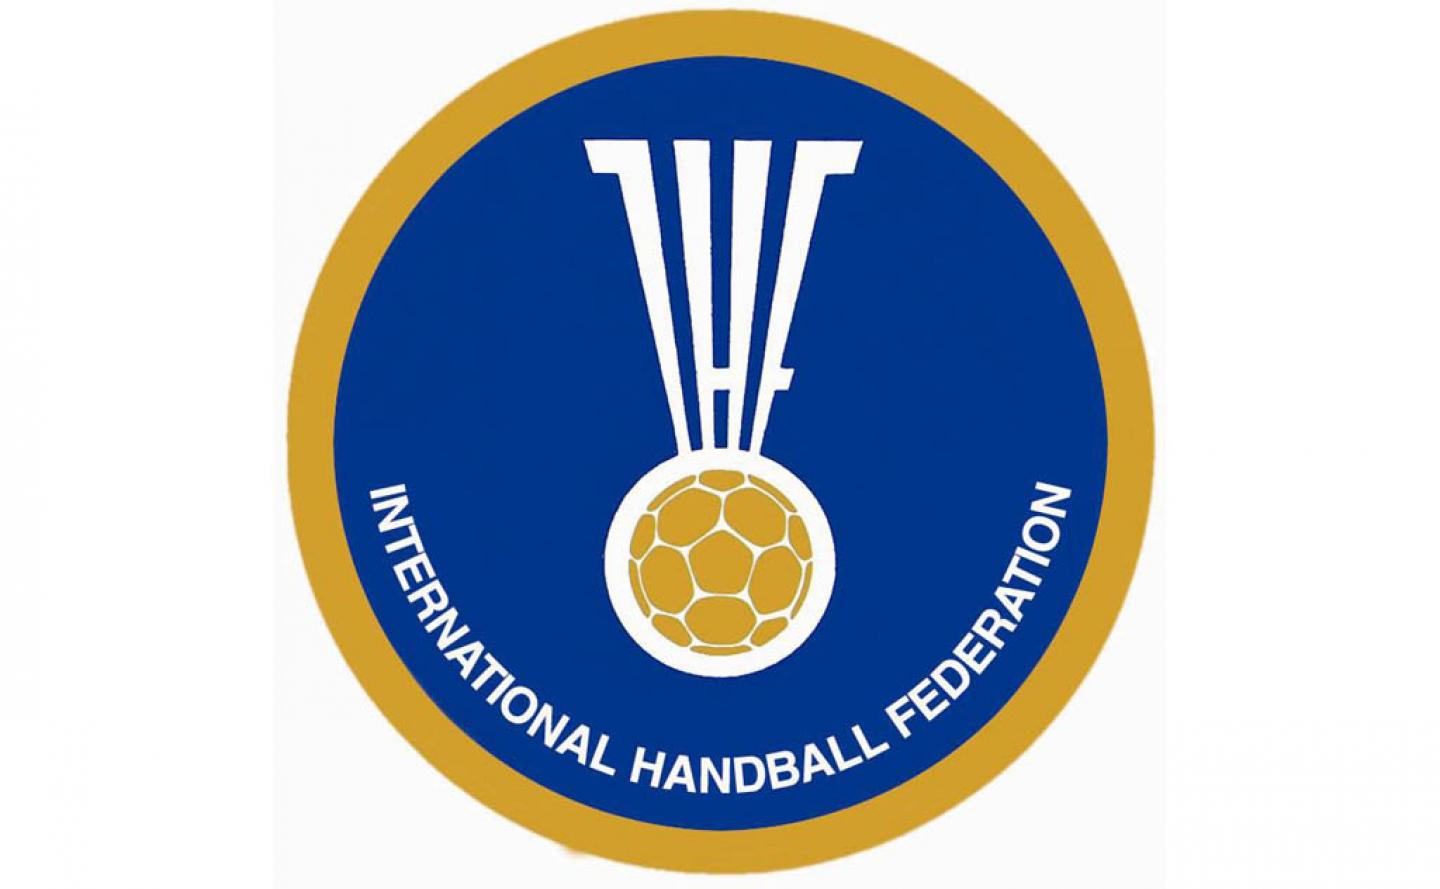 Oliveira re-elected as President of Brazilian Handball Federation